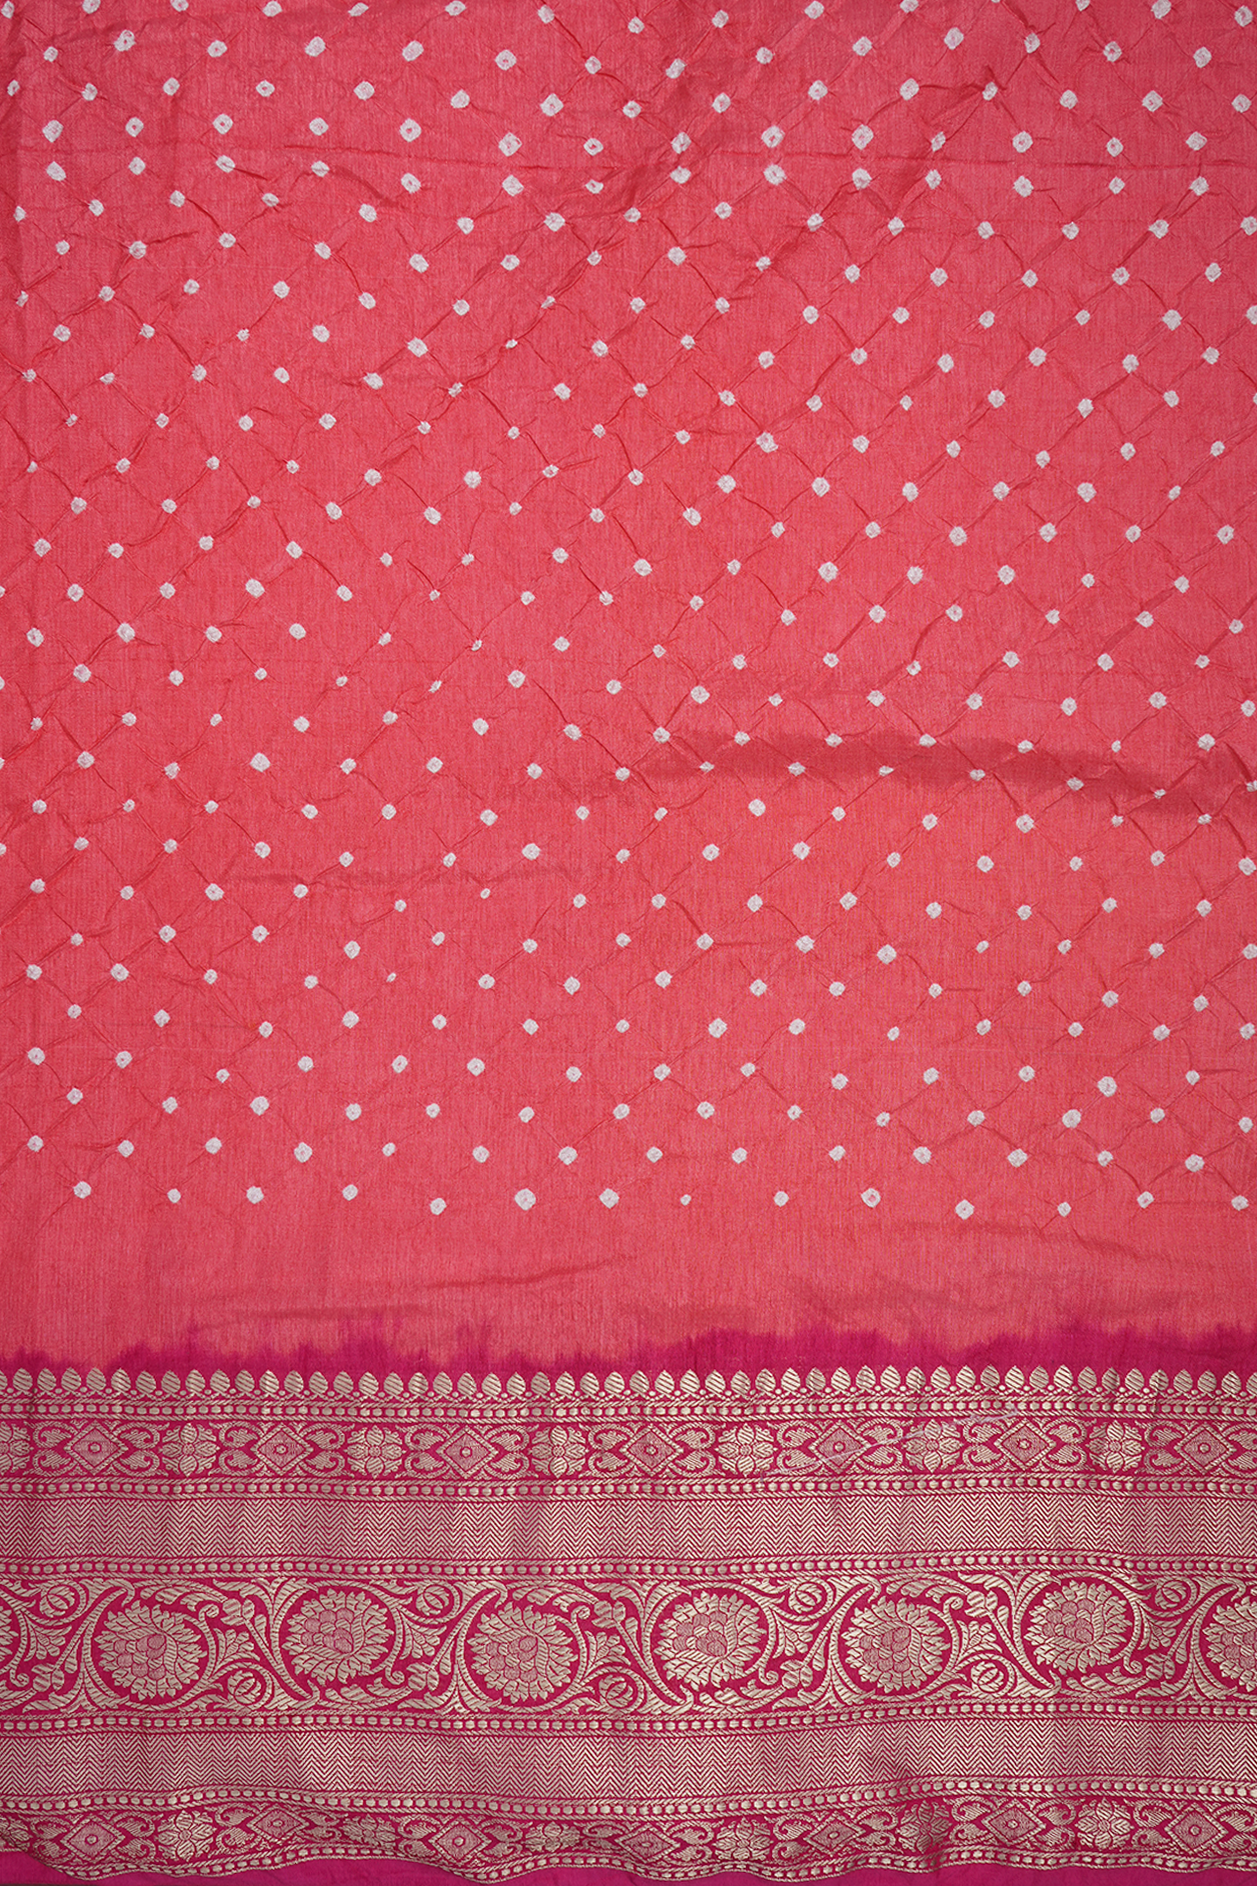 Dots Design Coral Pink Bandhani Silk Saree